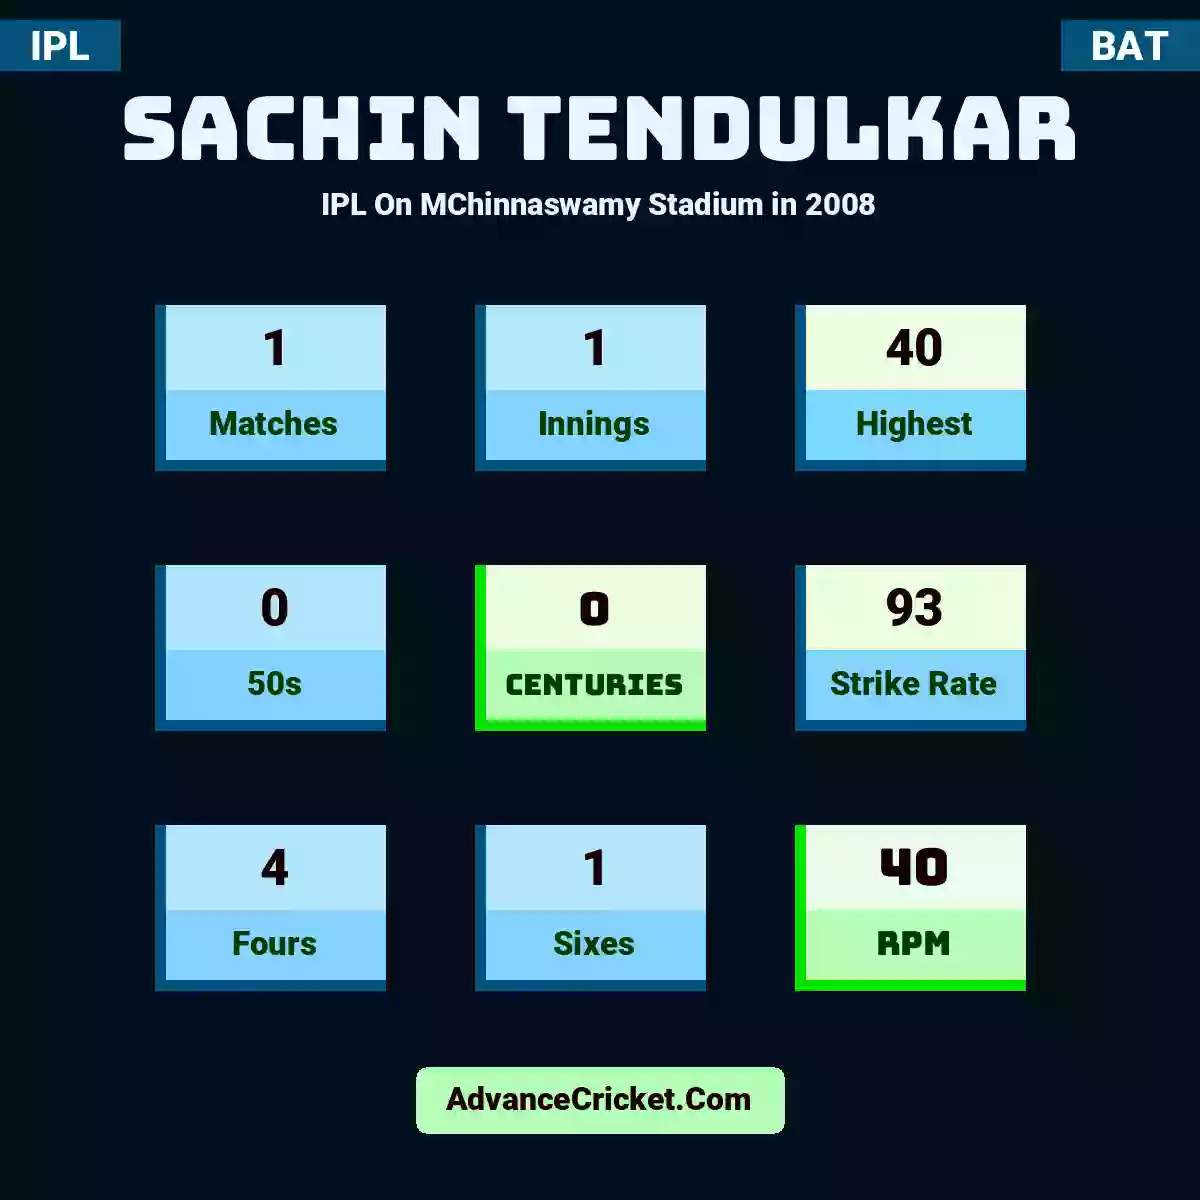 Sachin Tendulkar IPL  On MChinnaswamy Stadium in 2008, Sachin Tendulkar played 1 matches, scored 40 runs as highest, 0 half-centuries, and 0 centuries, with a strike rate of 93. S.Tendulkar hit 4 fours and 1 sixes, with an RPM of 40.